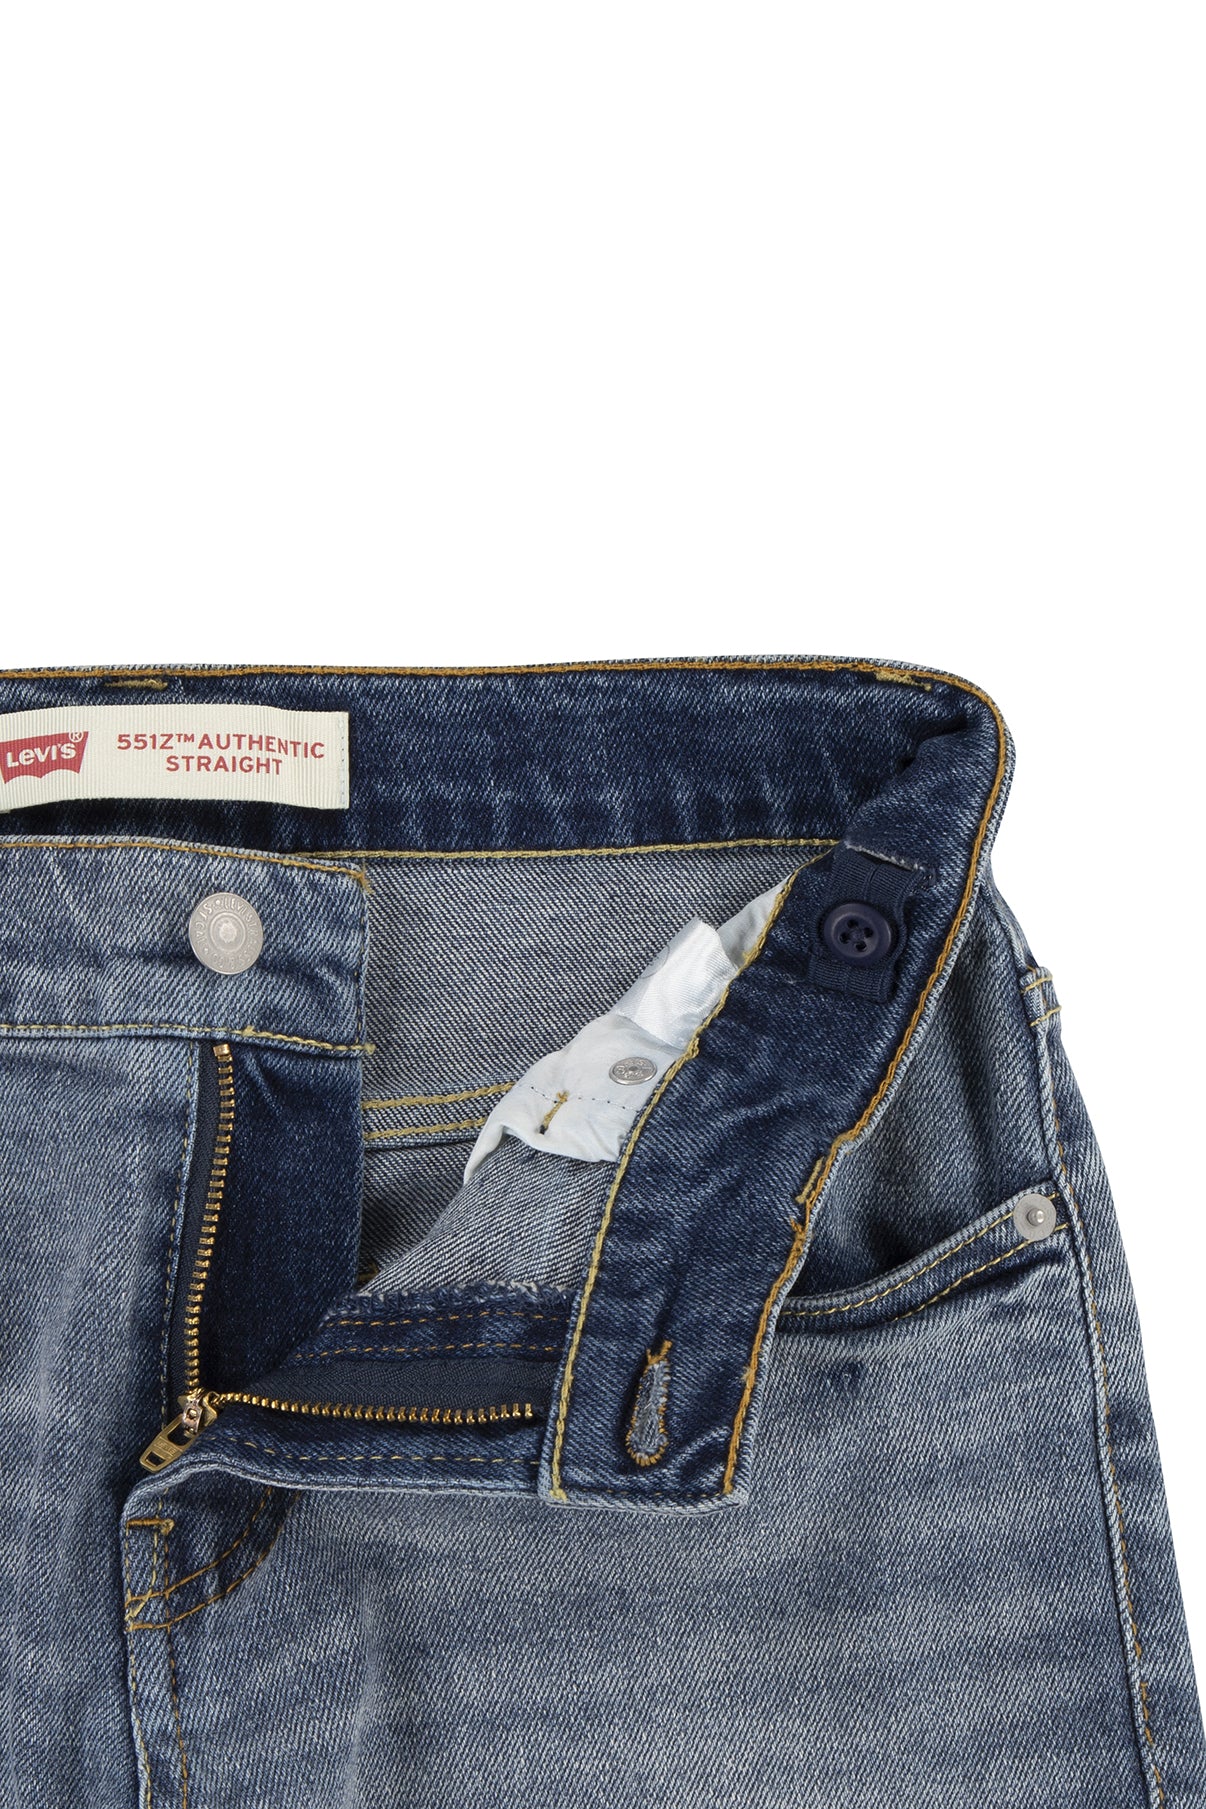 LEVIS BOY Jeans 551Z Authentic Straight